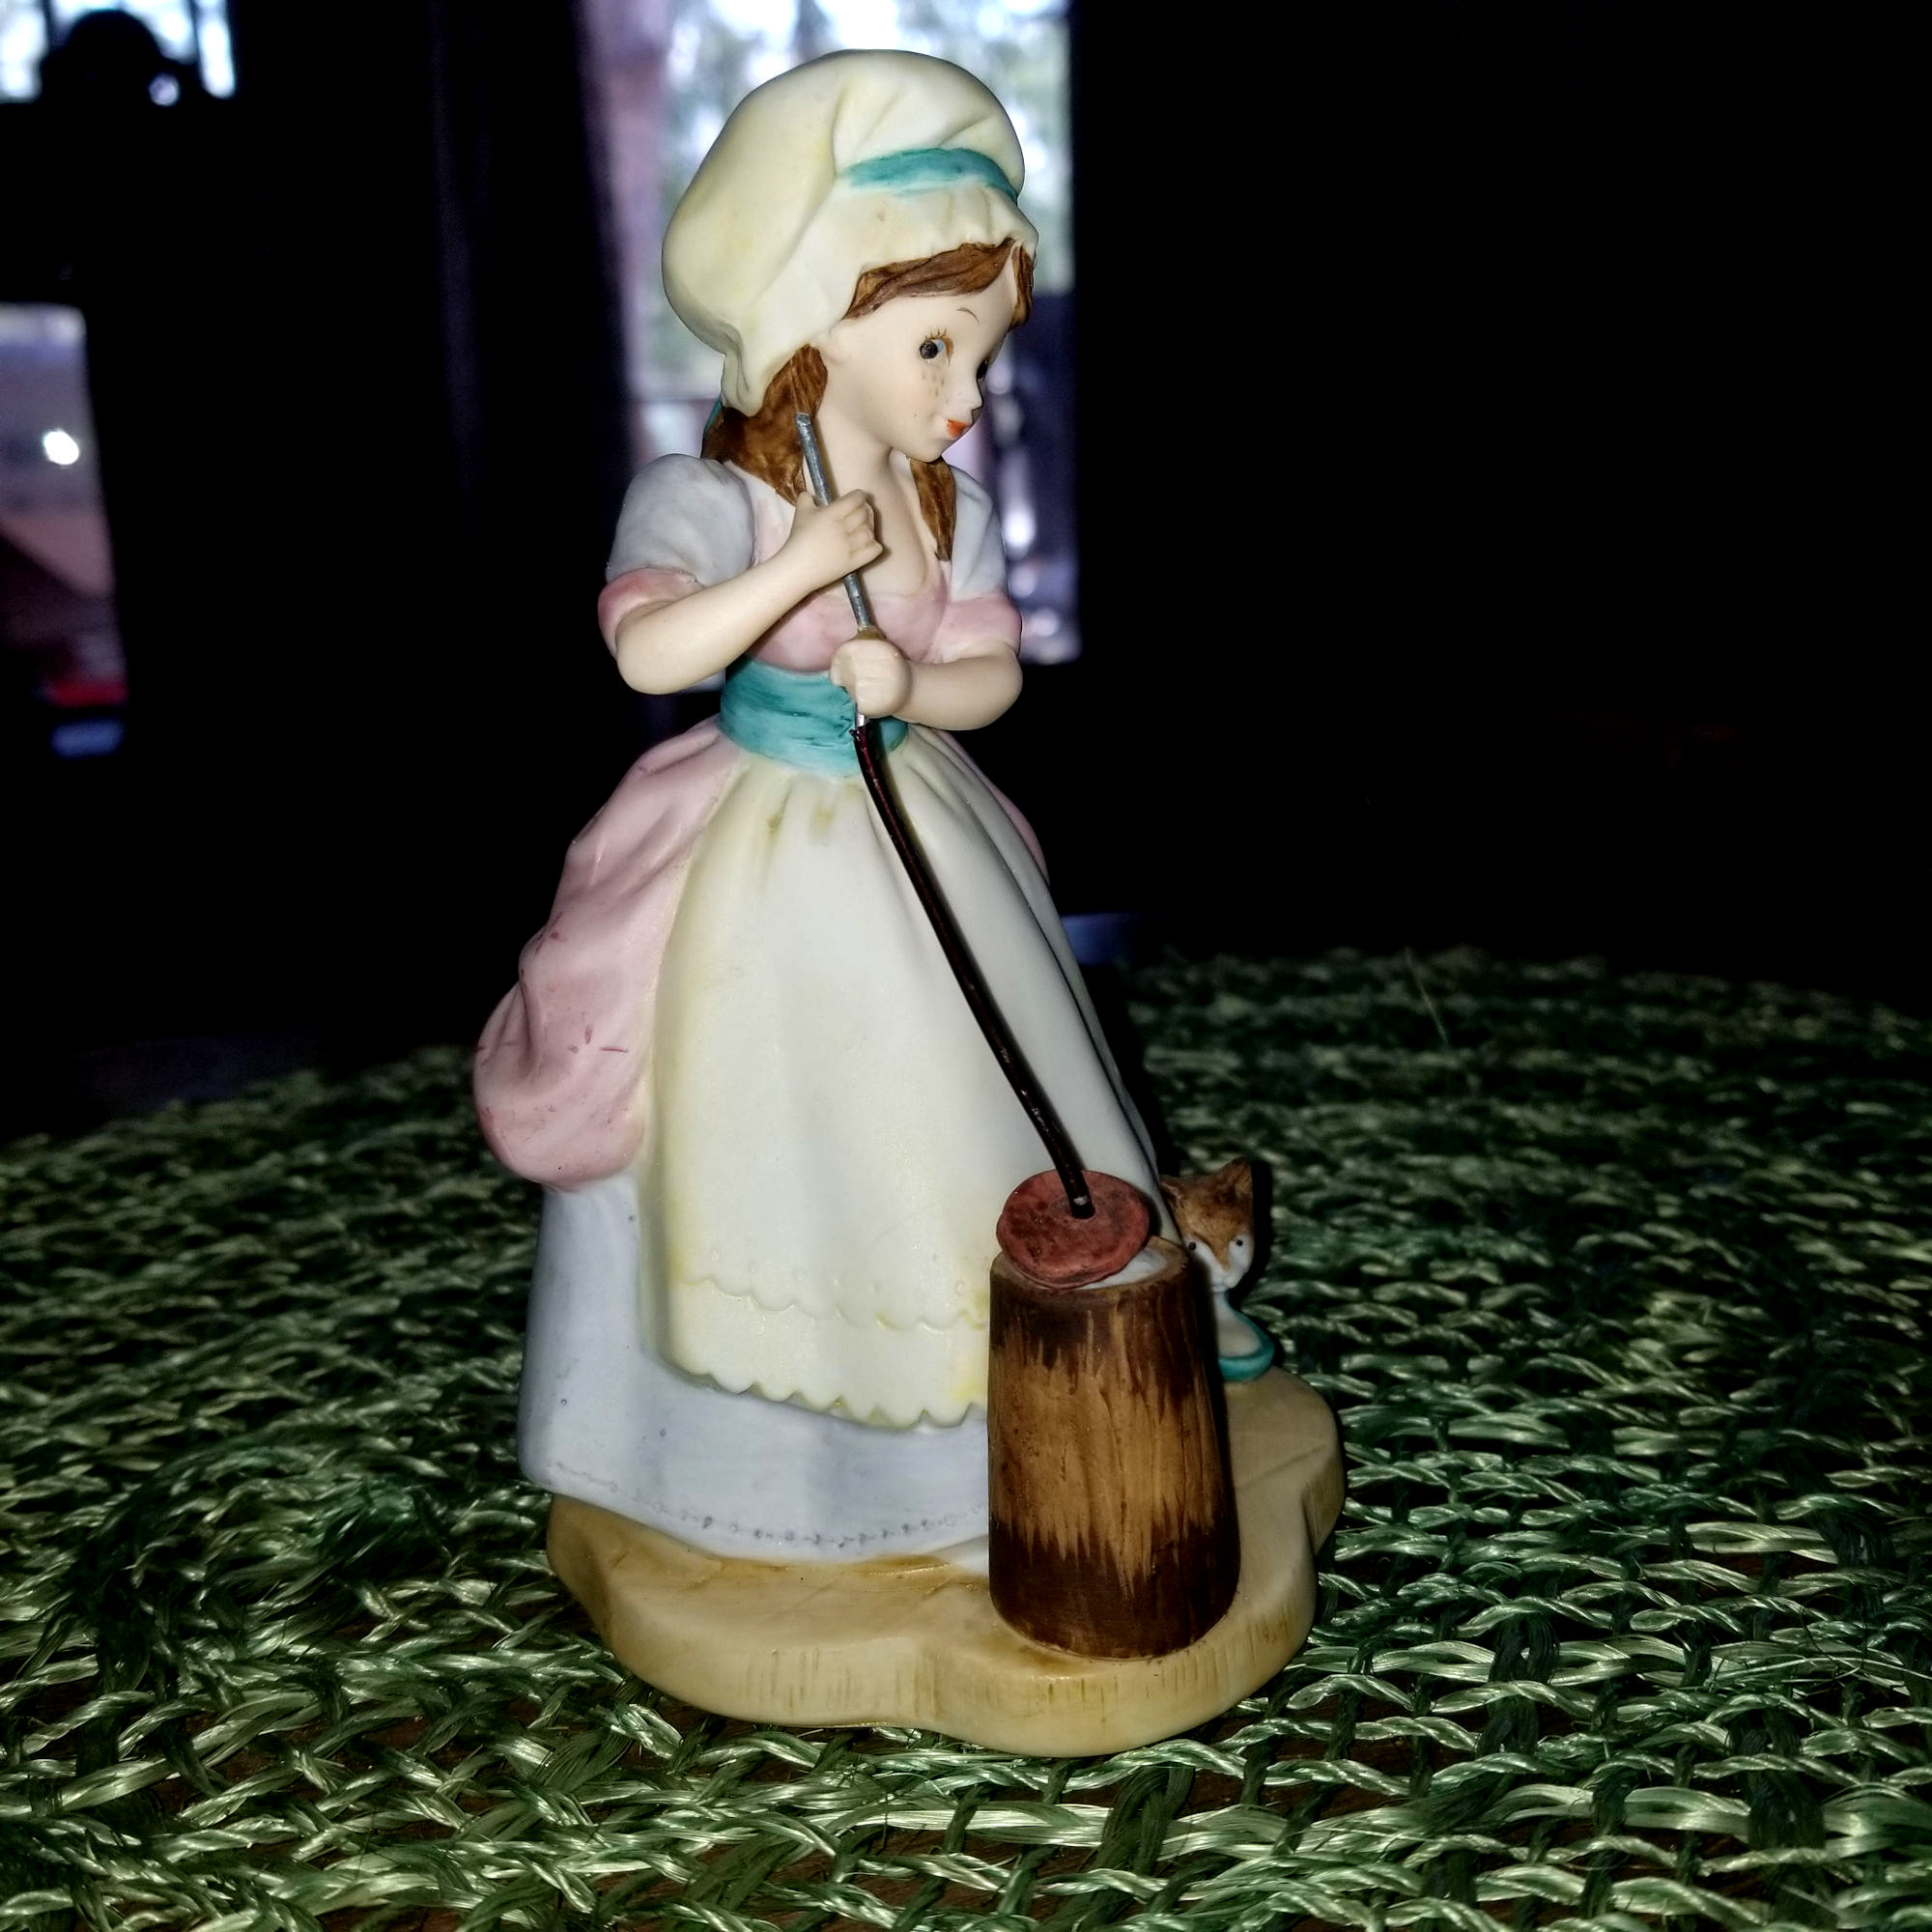 Classique 1973-1976
                                        porcelain bisque figurine girl
                                        churning butter